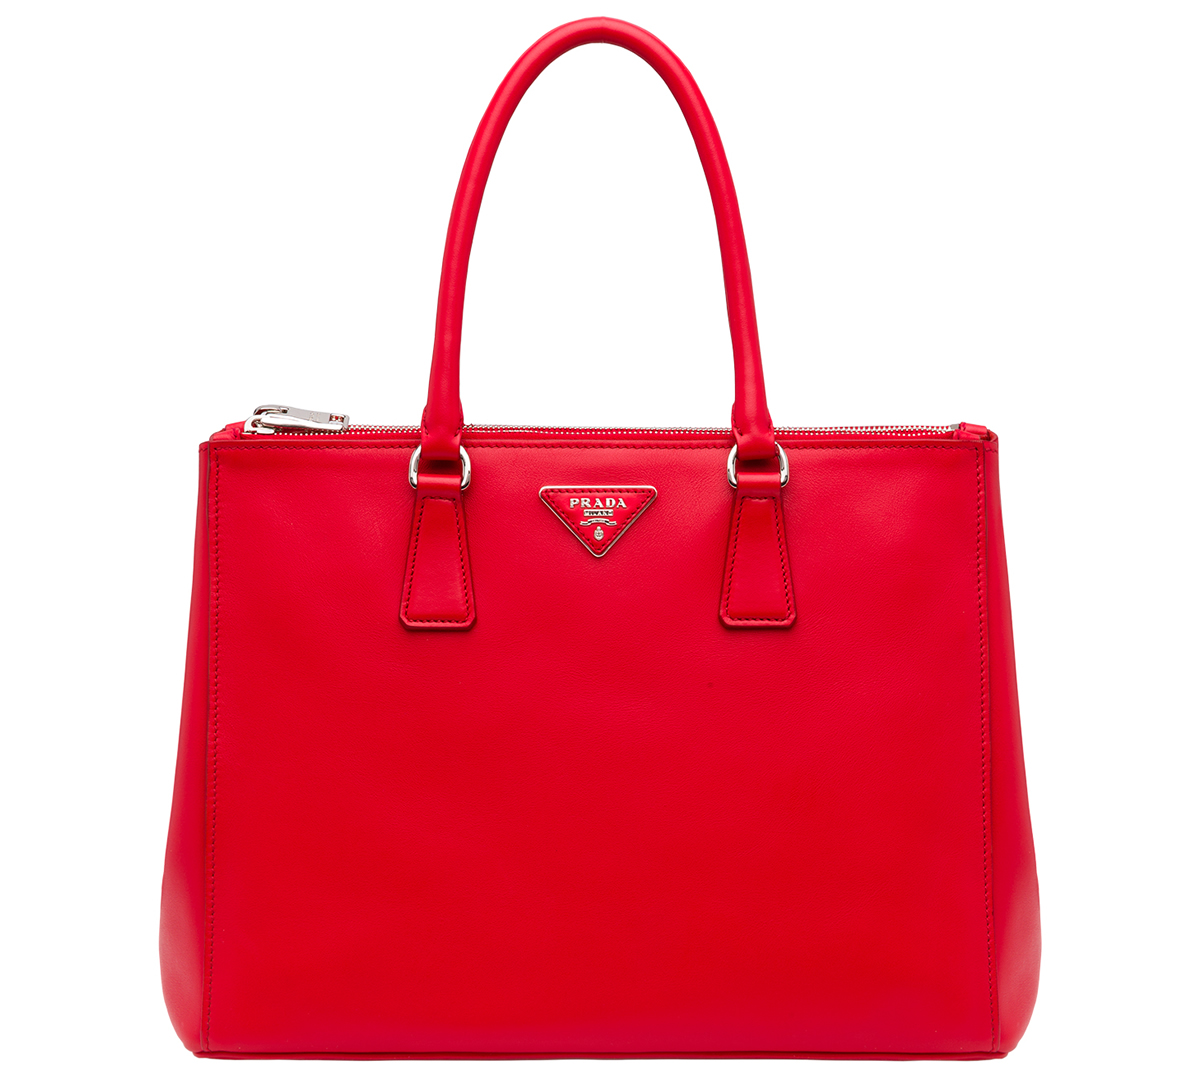 prada handbag on sale - The New Prada Galleria Bag in City Calf - PurseBlog